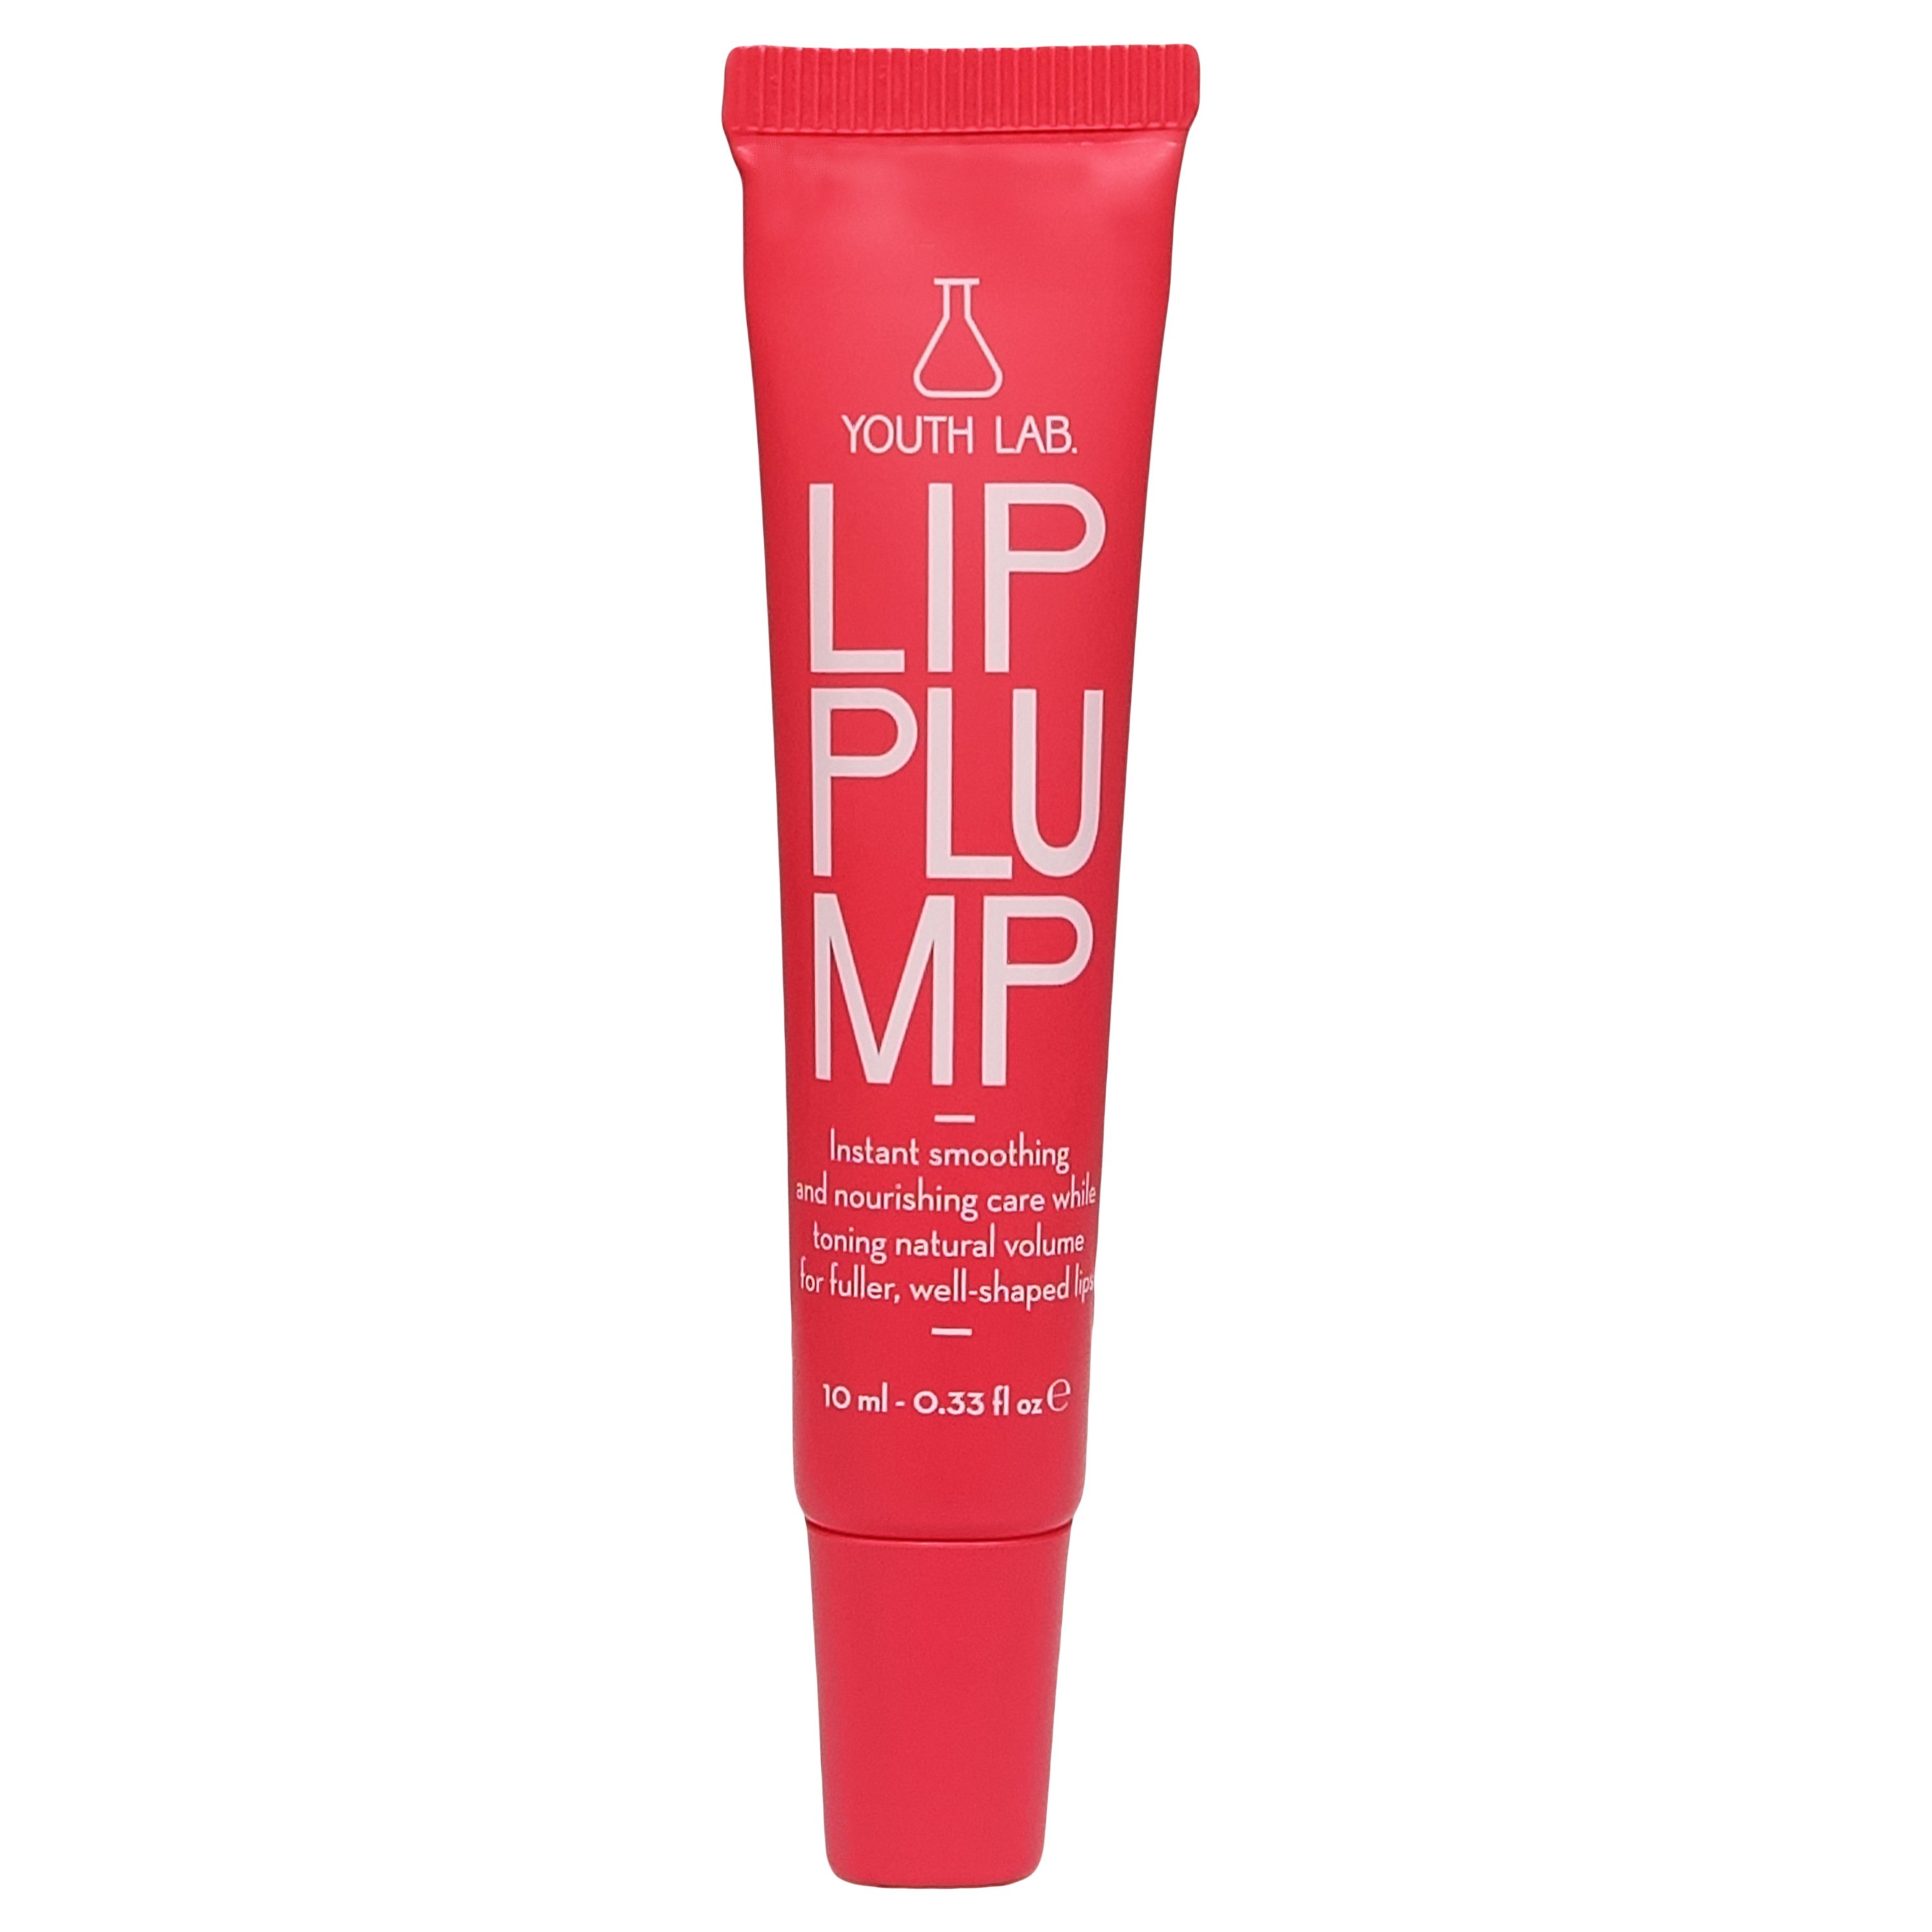 Youth Lab Lip Plump Instant Smoothing & Nourishing Lip Care Lip Gloss για Περιποίηση Χειλιών & Λείανση Γραμμών 10ml